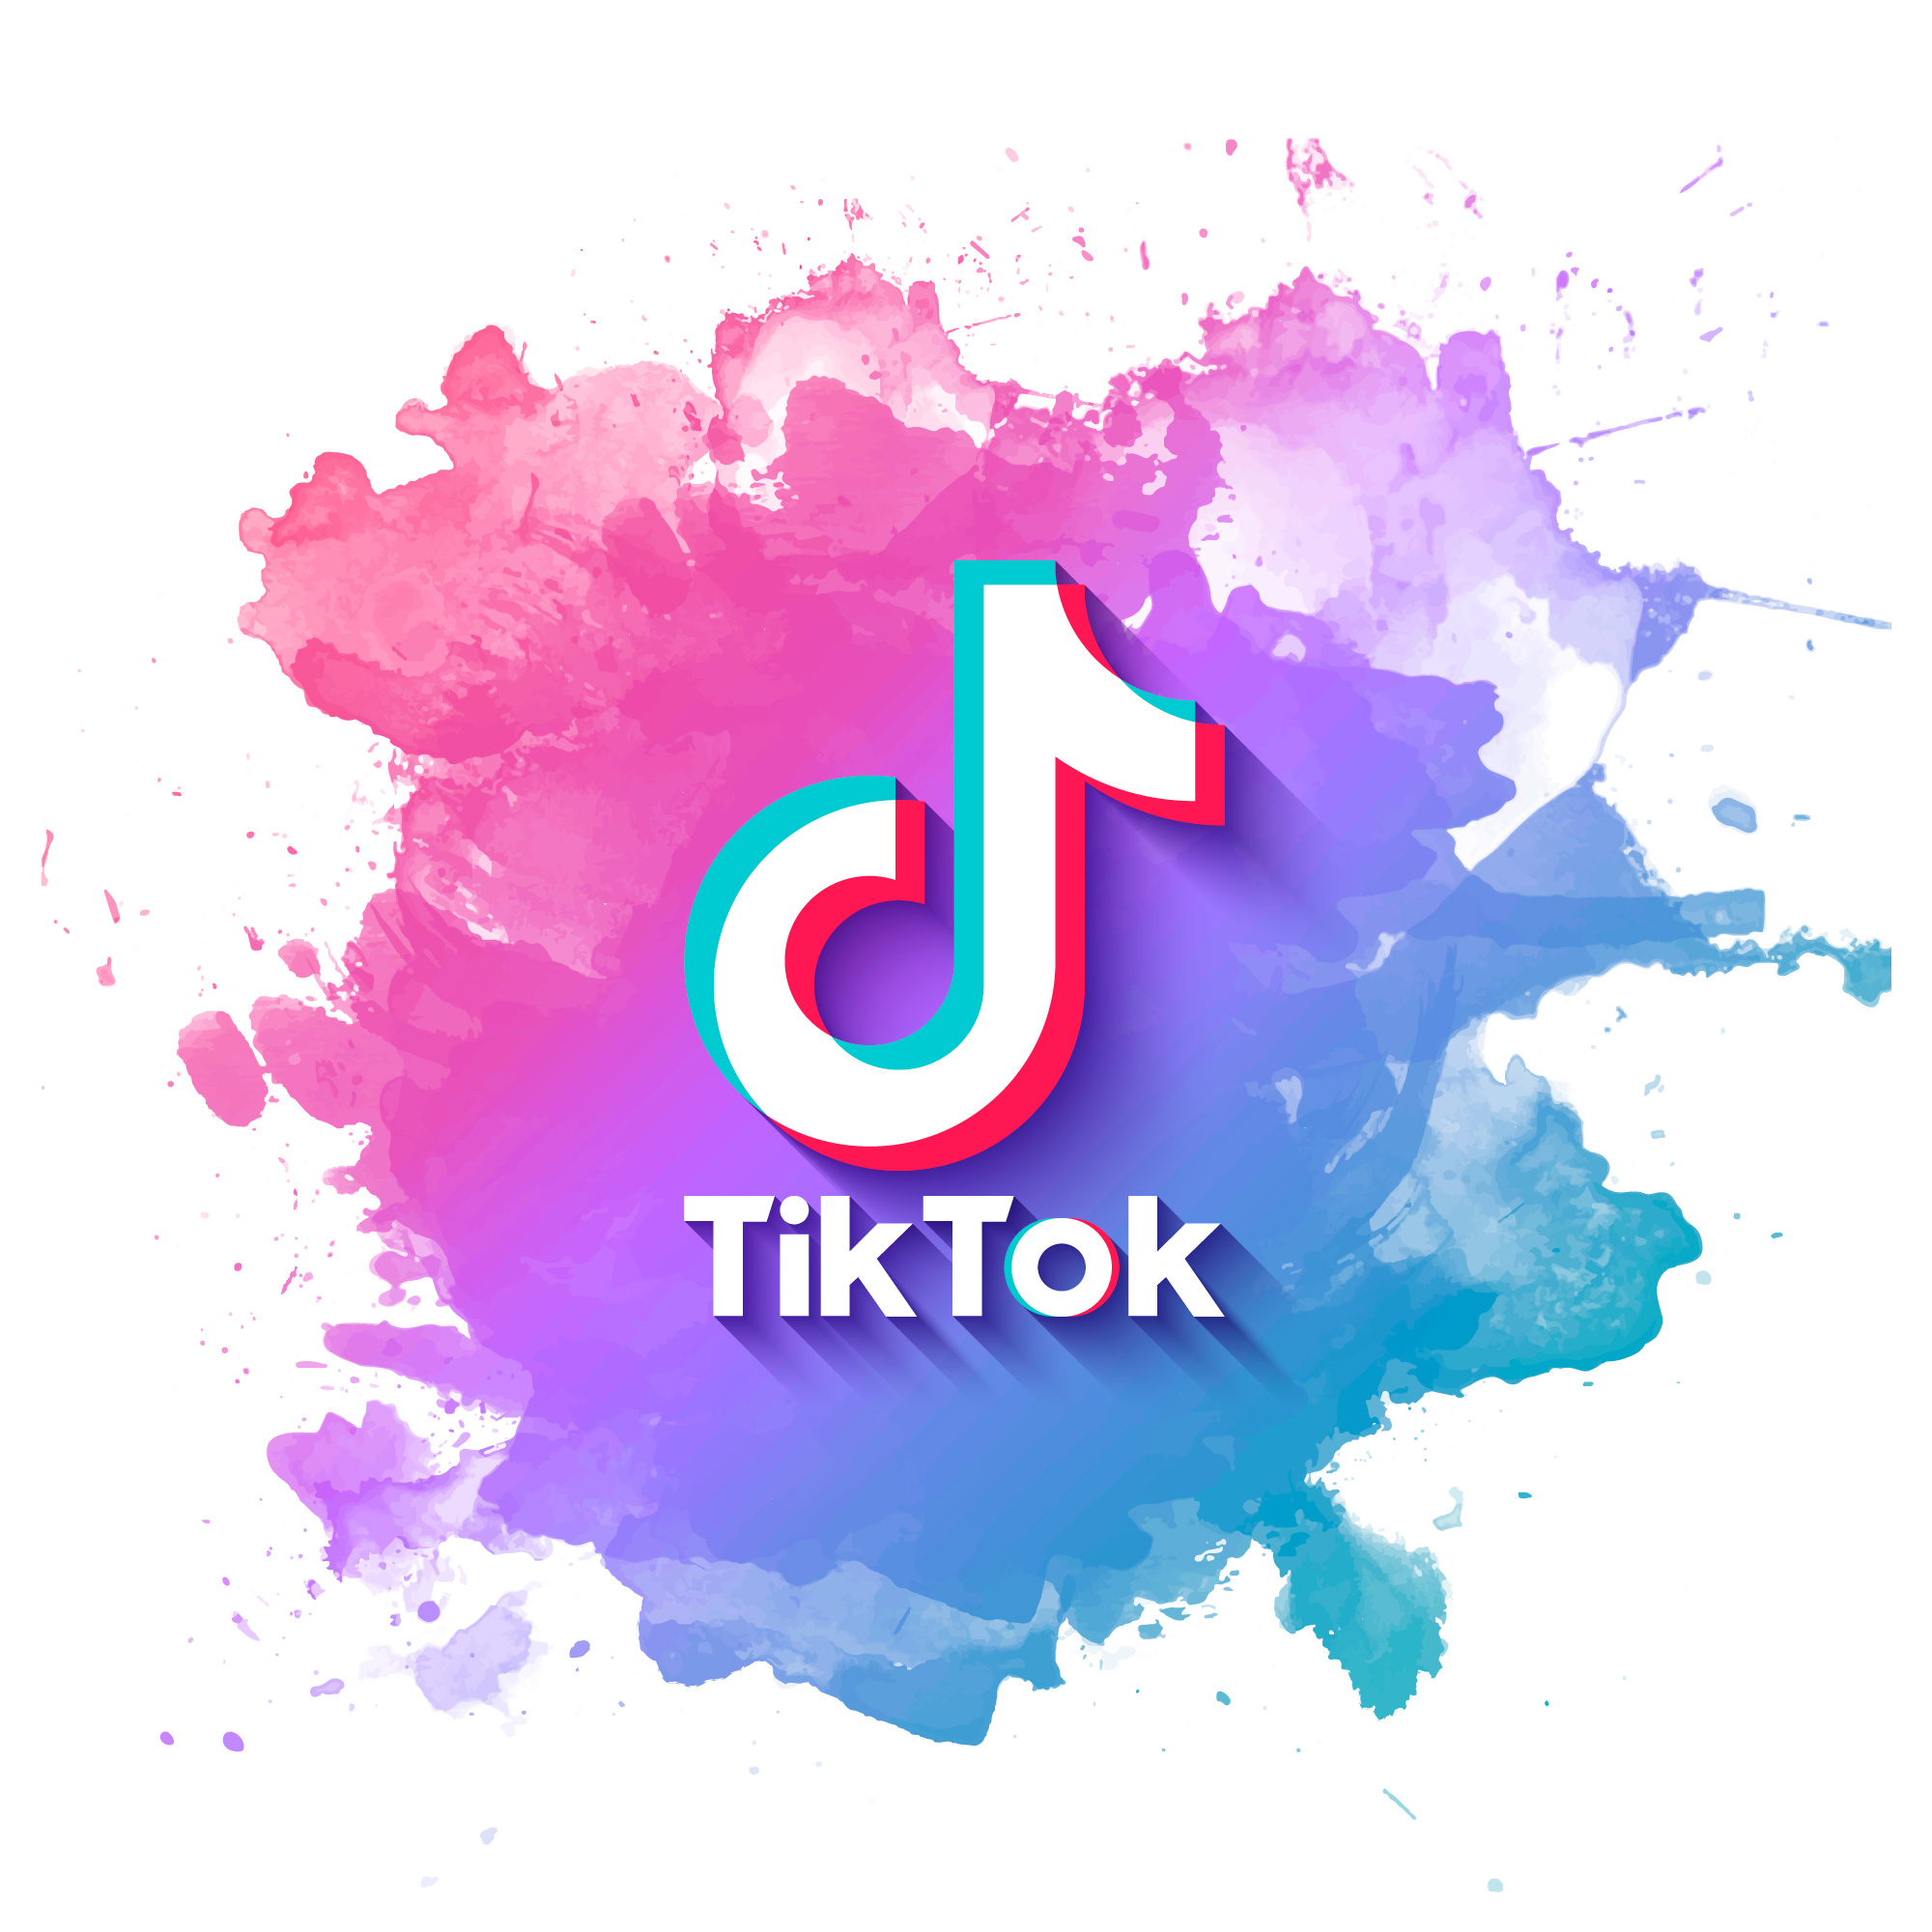 Hottest Tiktok Trends in the Philippines